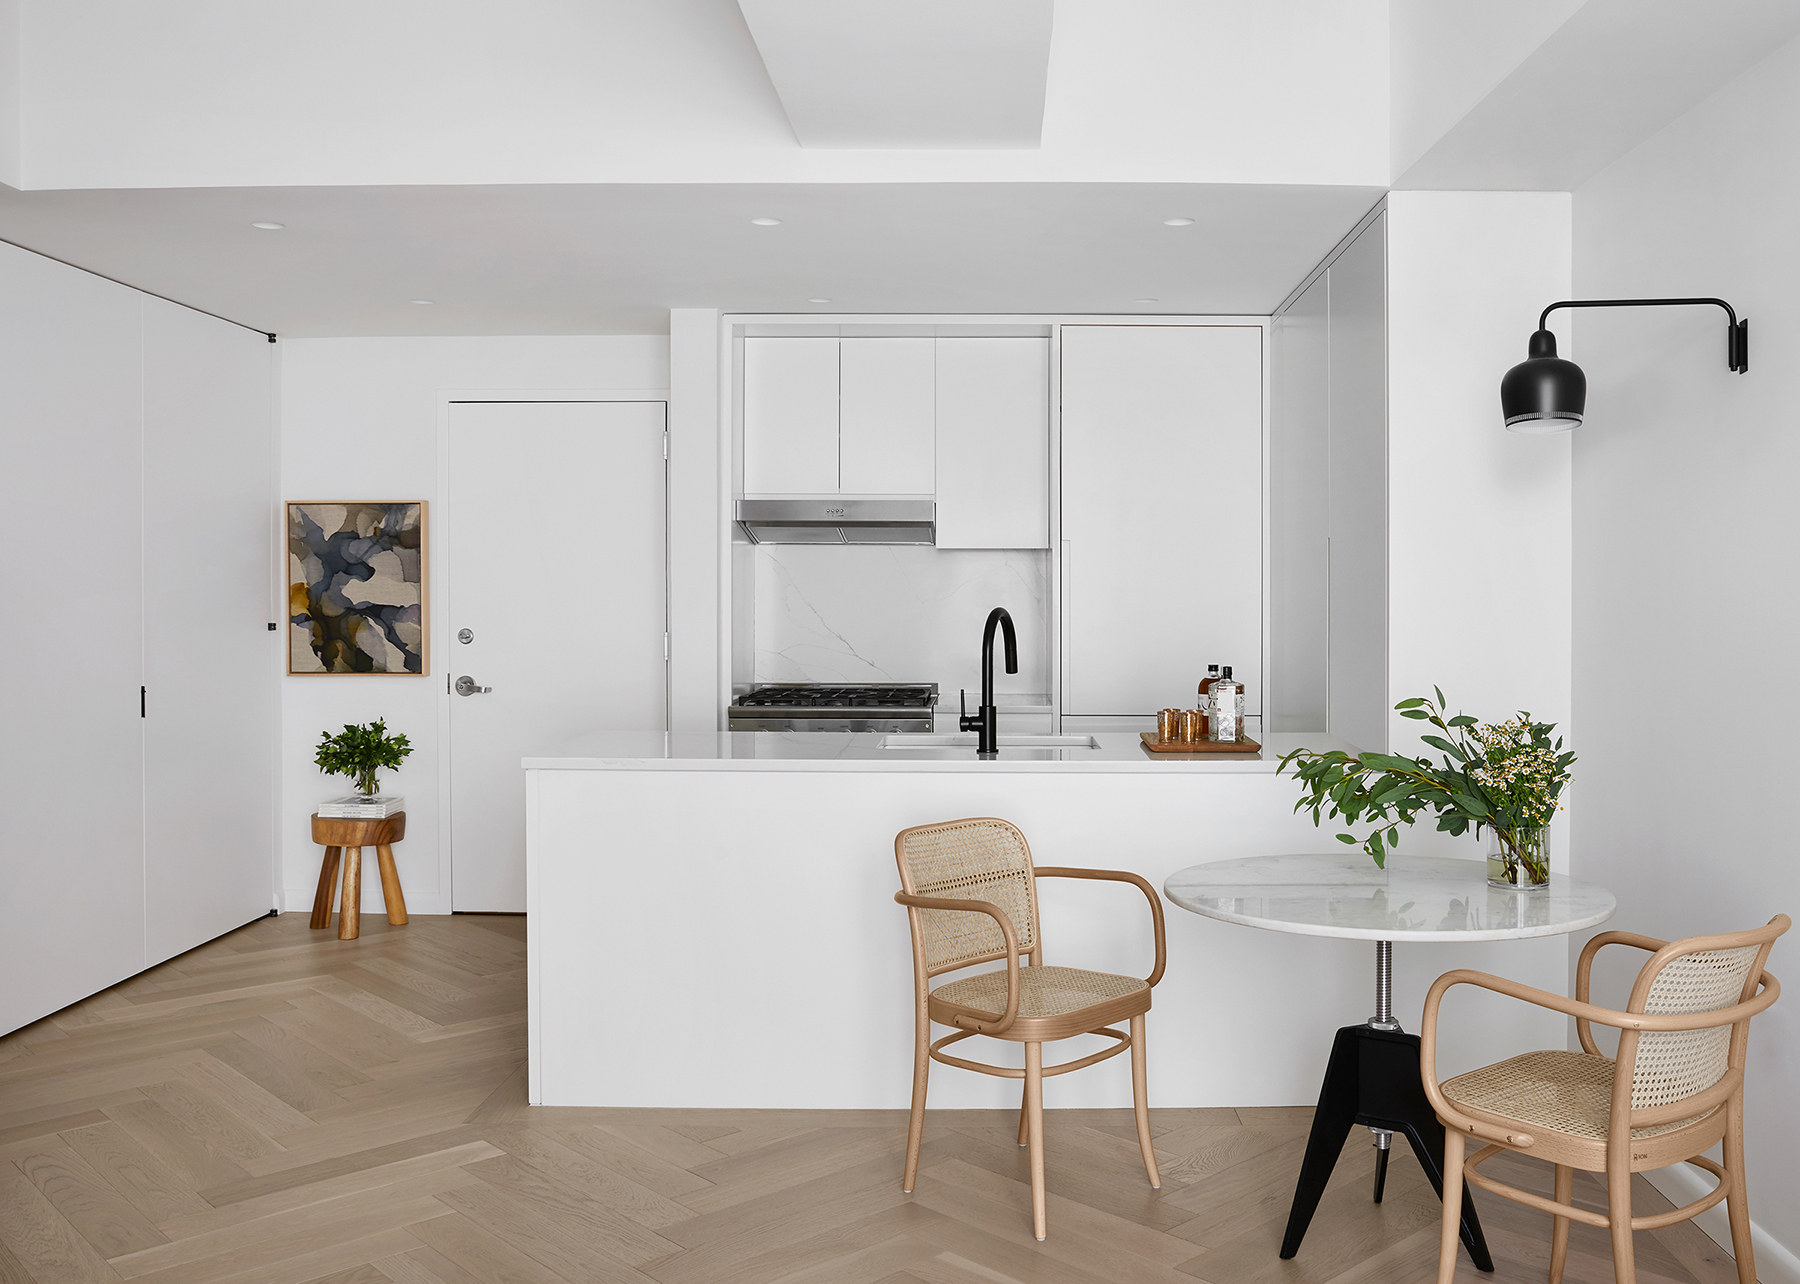 Long Island City Apartment, STADT Architecture, Custom Kitchen, Kitchen Design